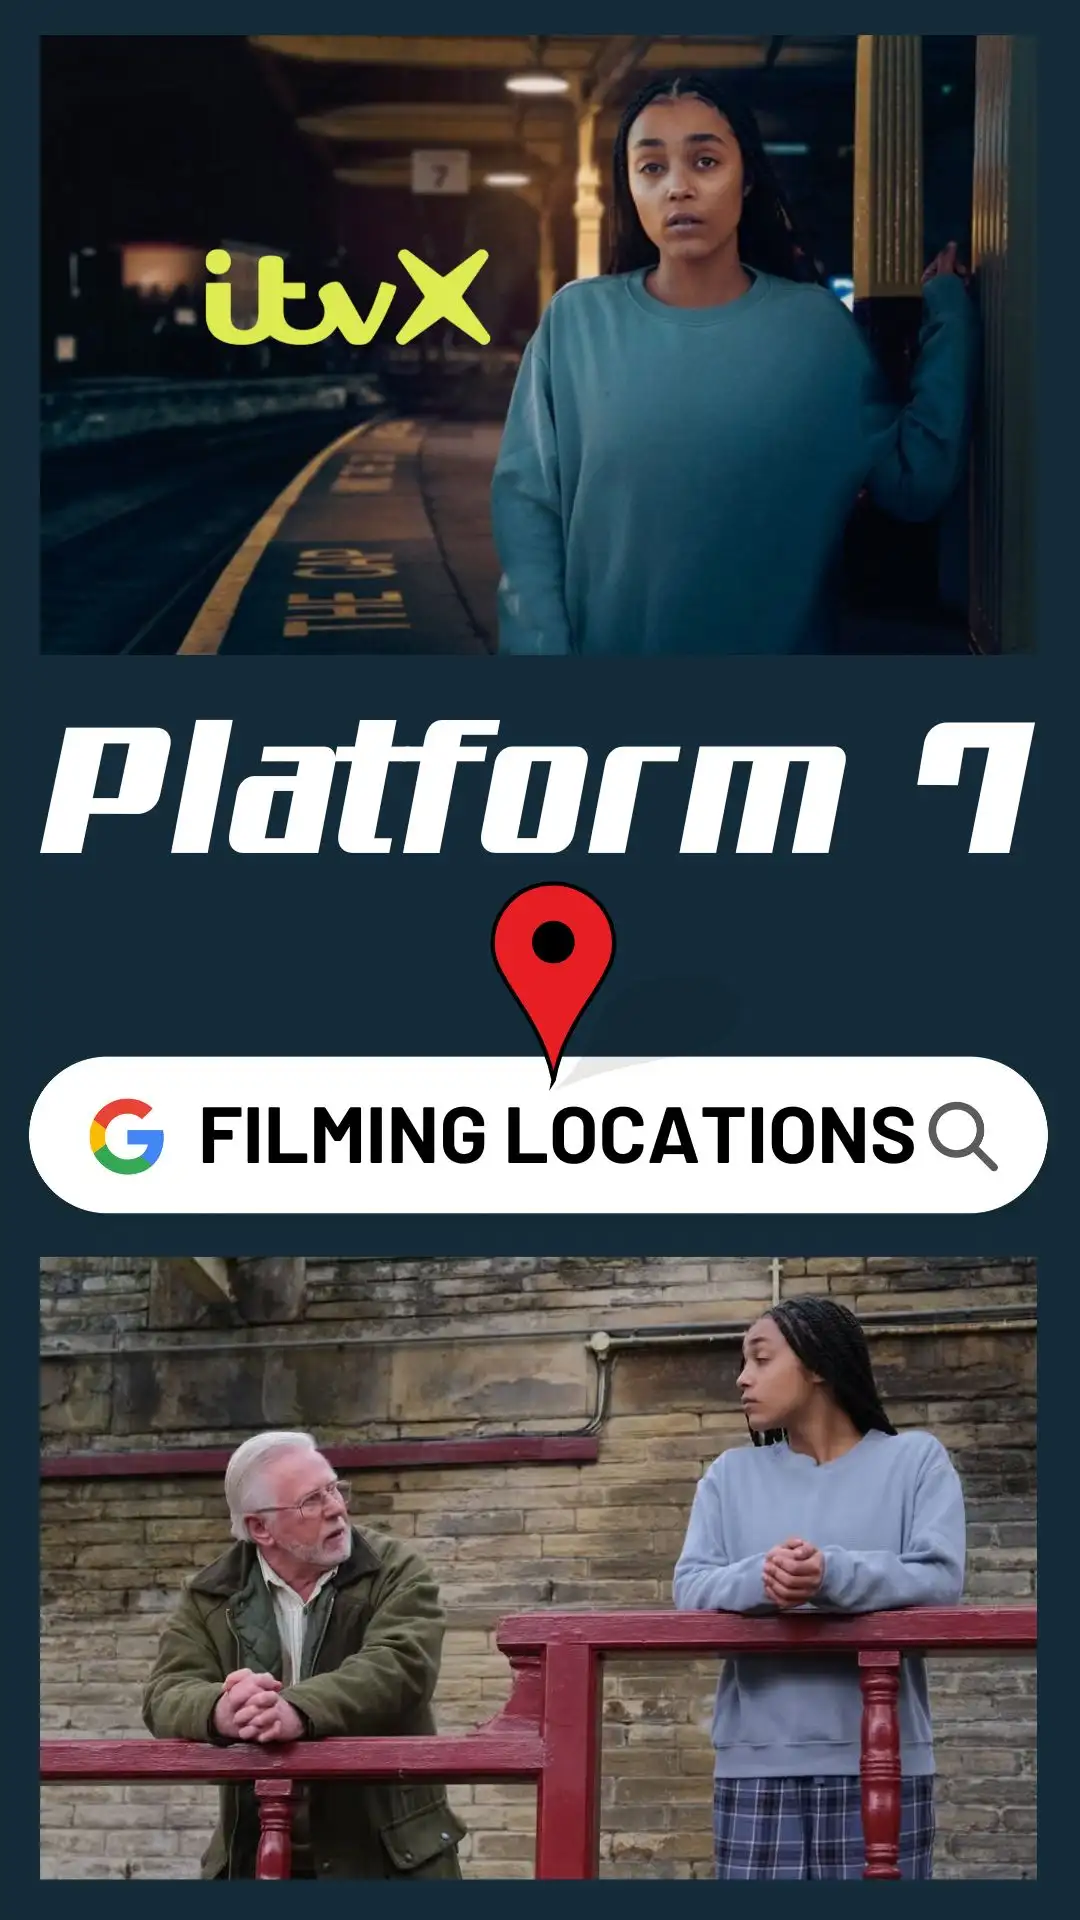 Platform 7 Filming Locations